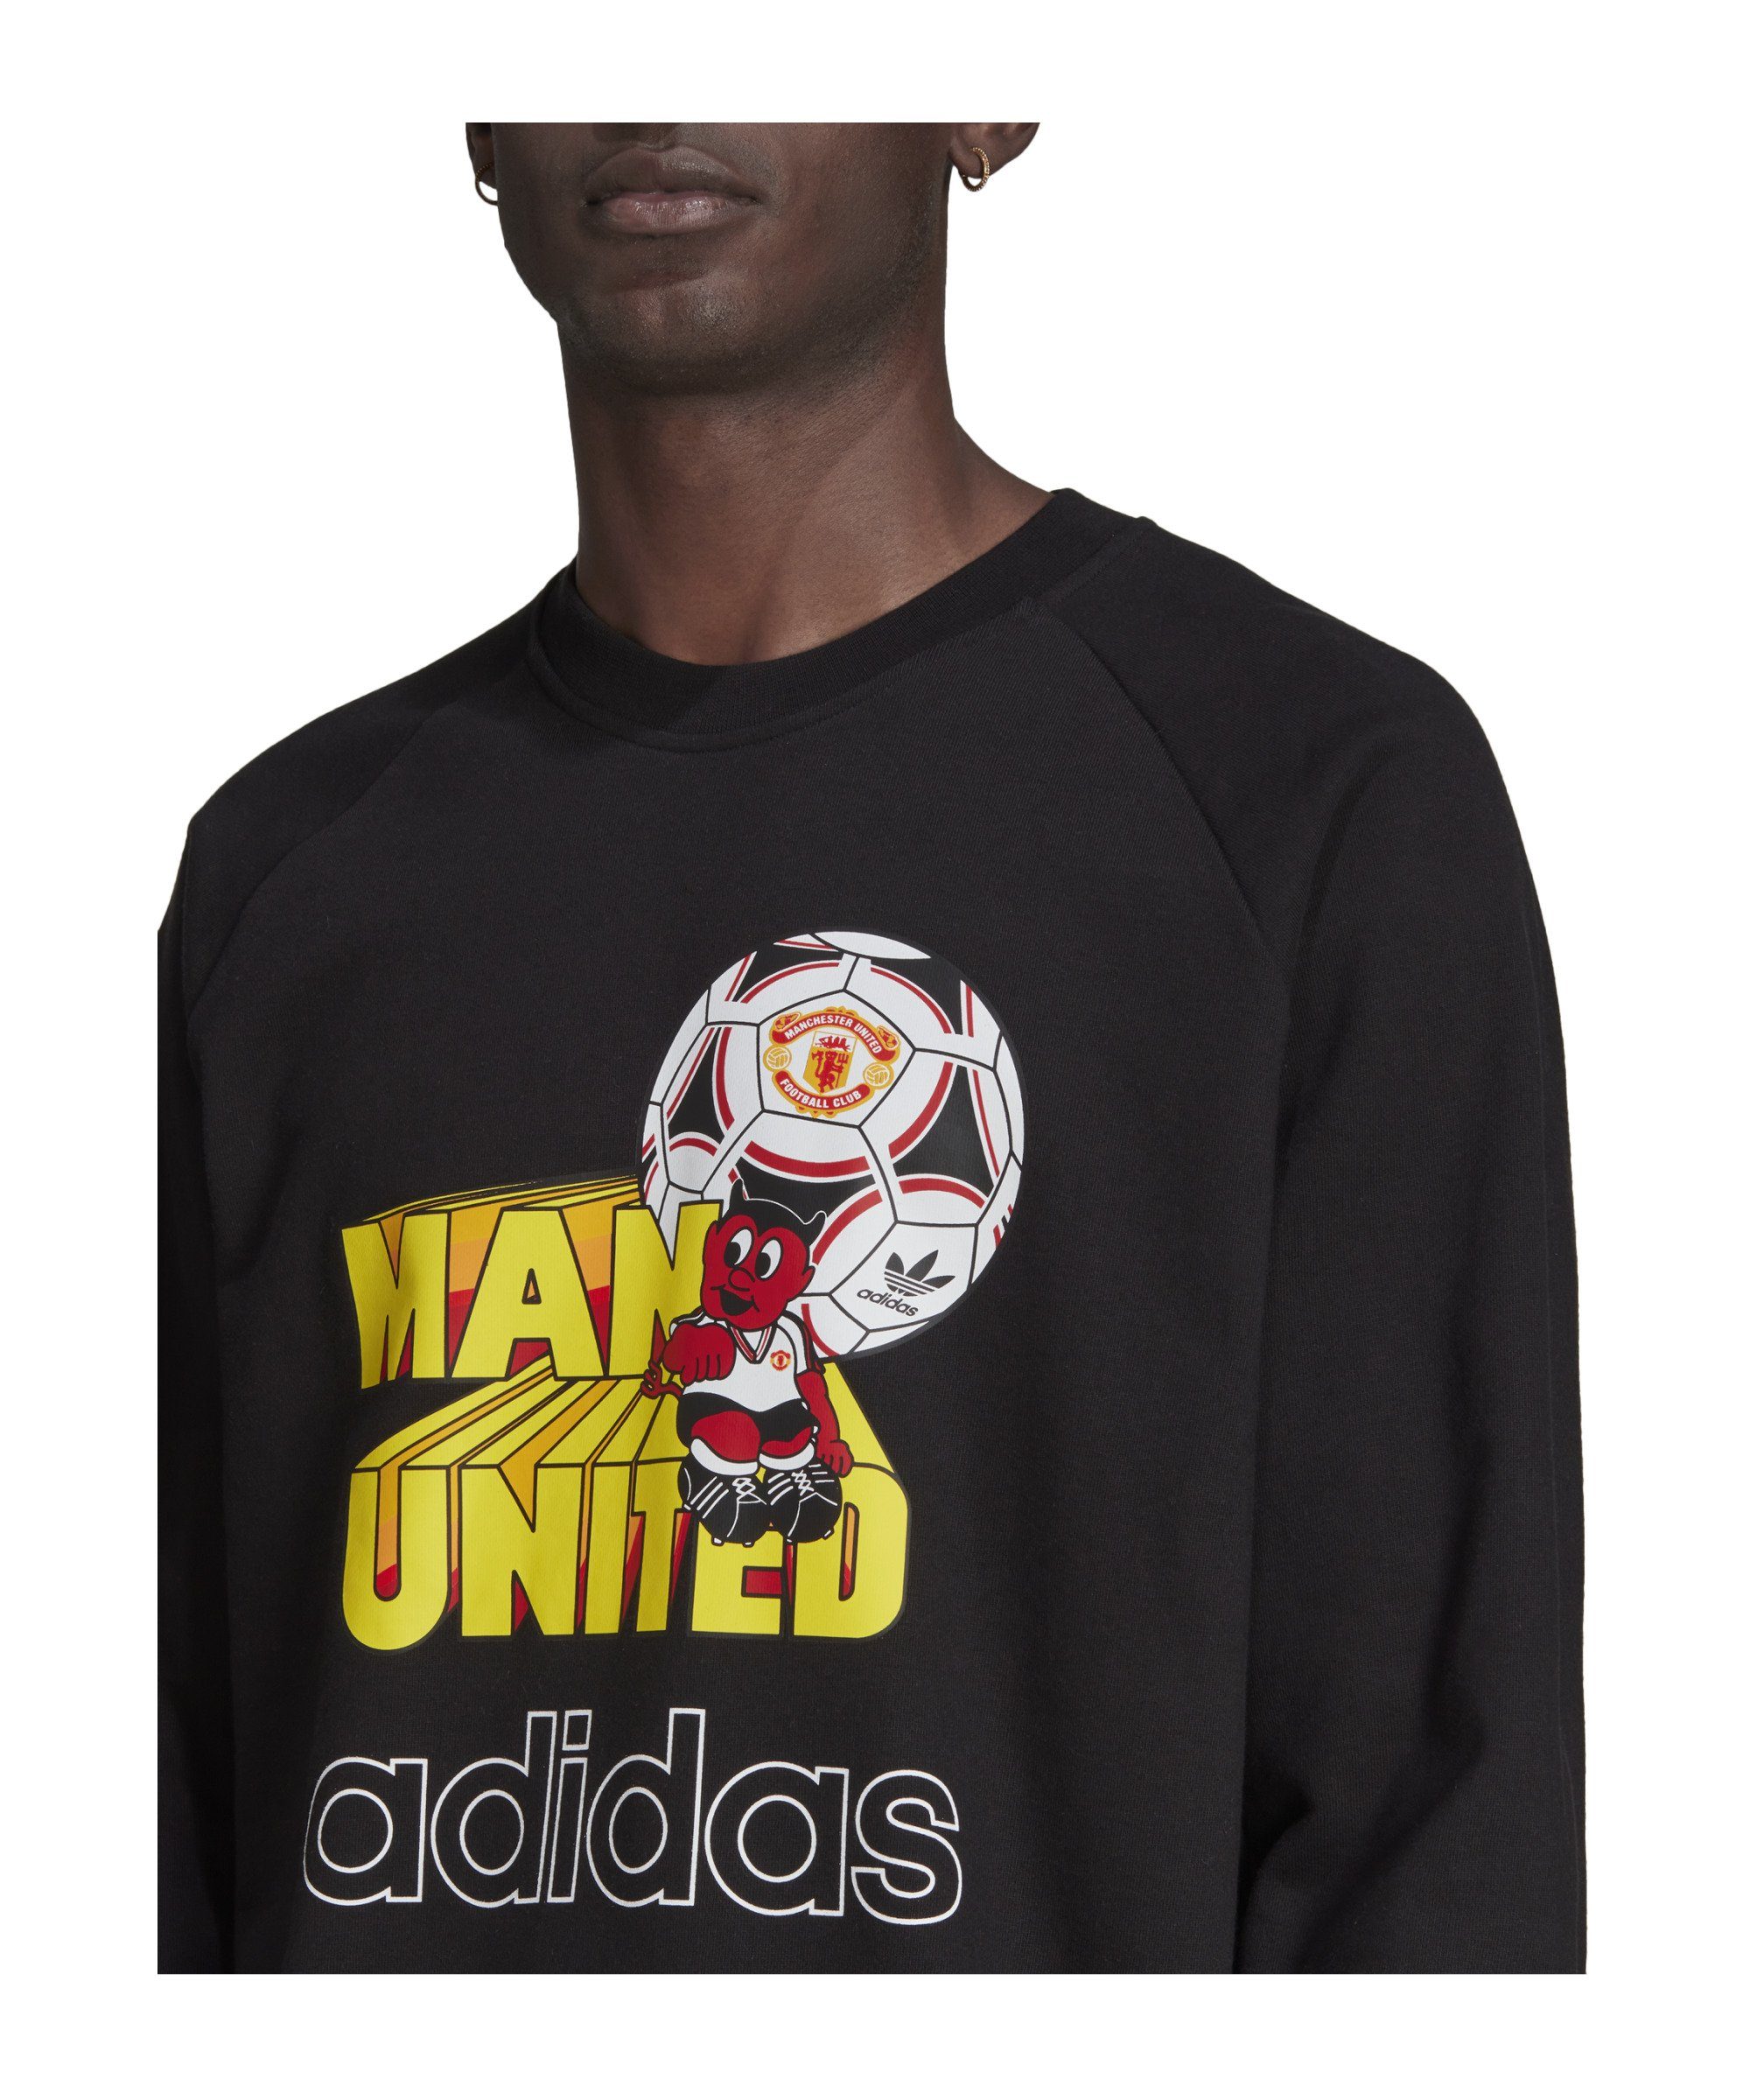 adidas Originals Man. United Sweatshirt Sweatshirt